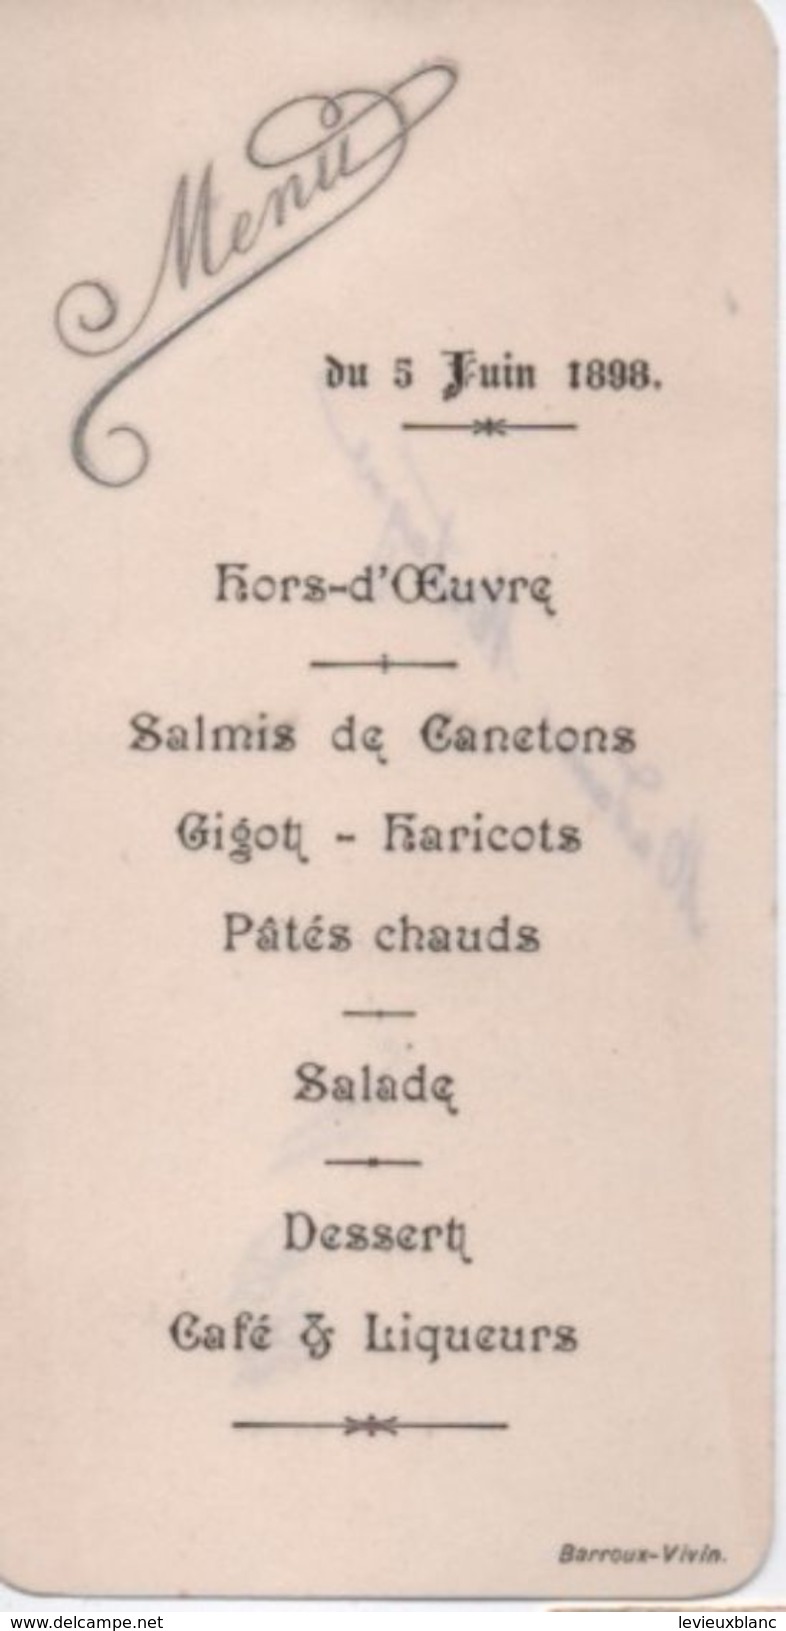 Menu / Petit/ Madame Matagne/ Barroux-Vivin / 1898        MENU218 - Menus